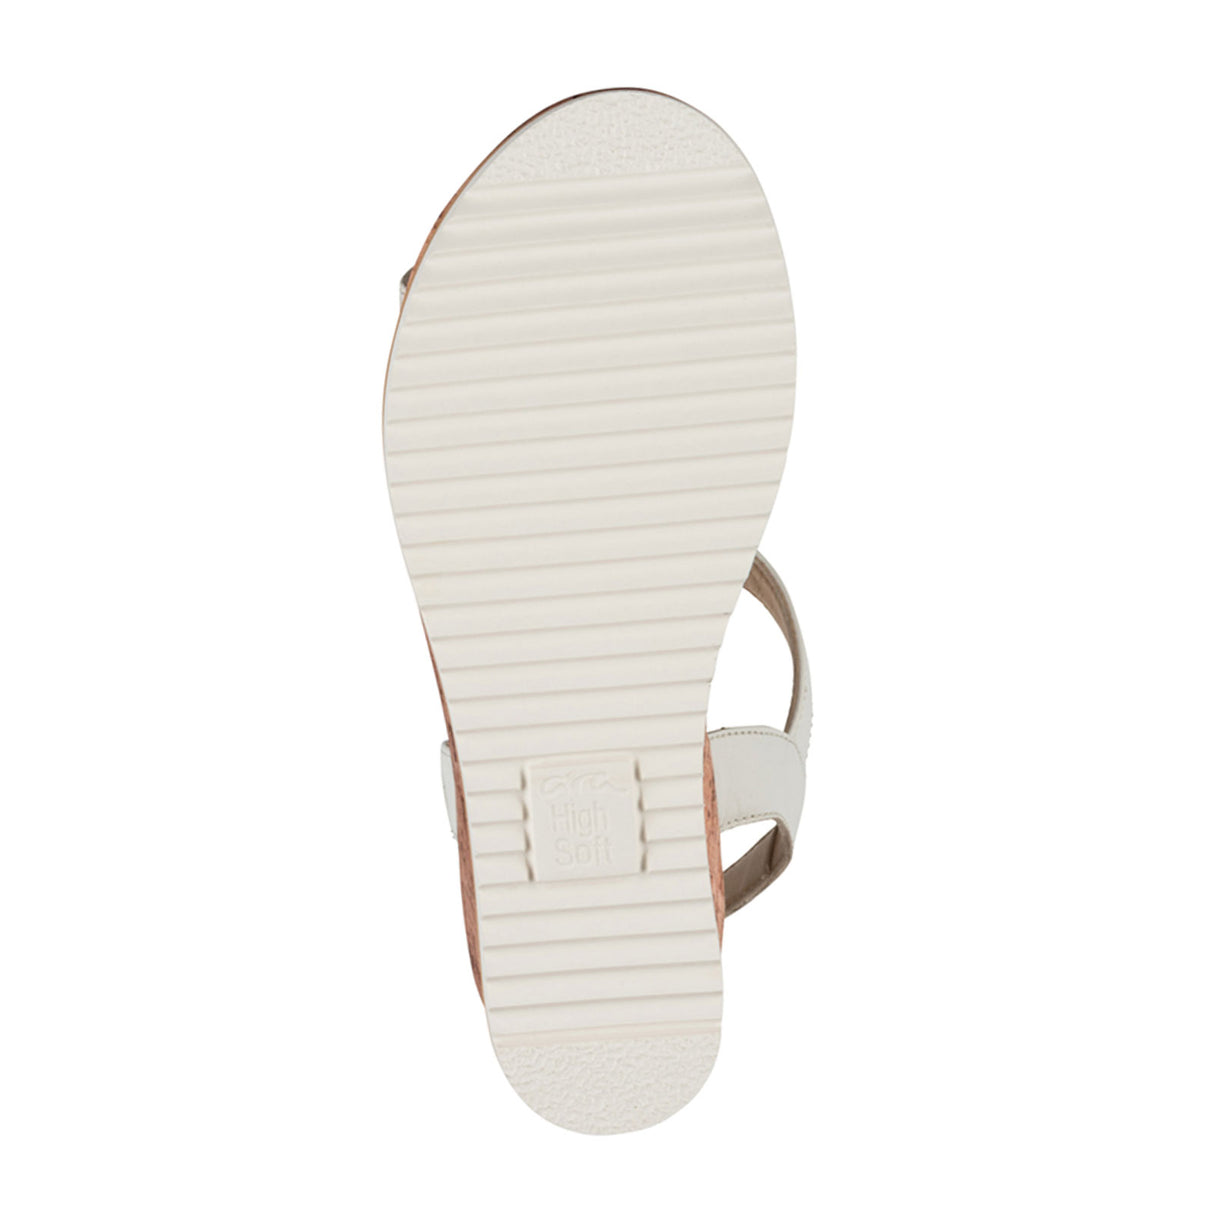 Ara Palmdale Wedge Sandal (Women) - White Nappa Leather Sandals - Heel/Wedge - The Heel Shoe Fitters